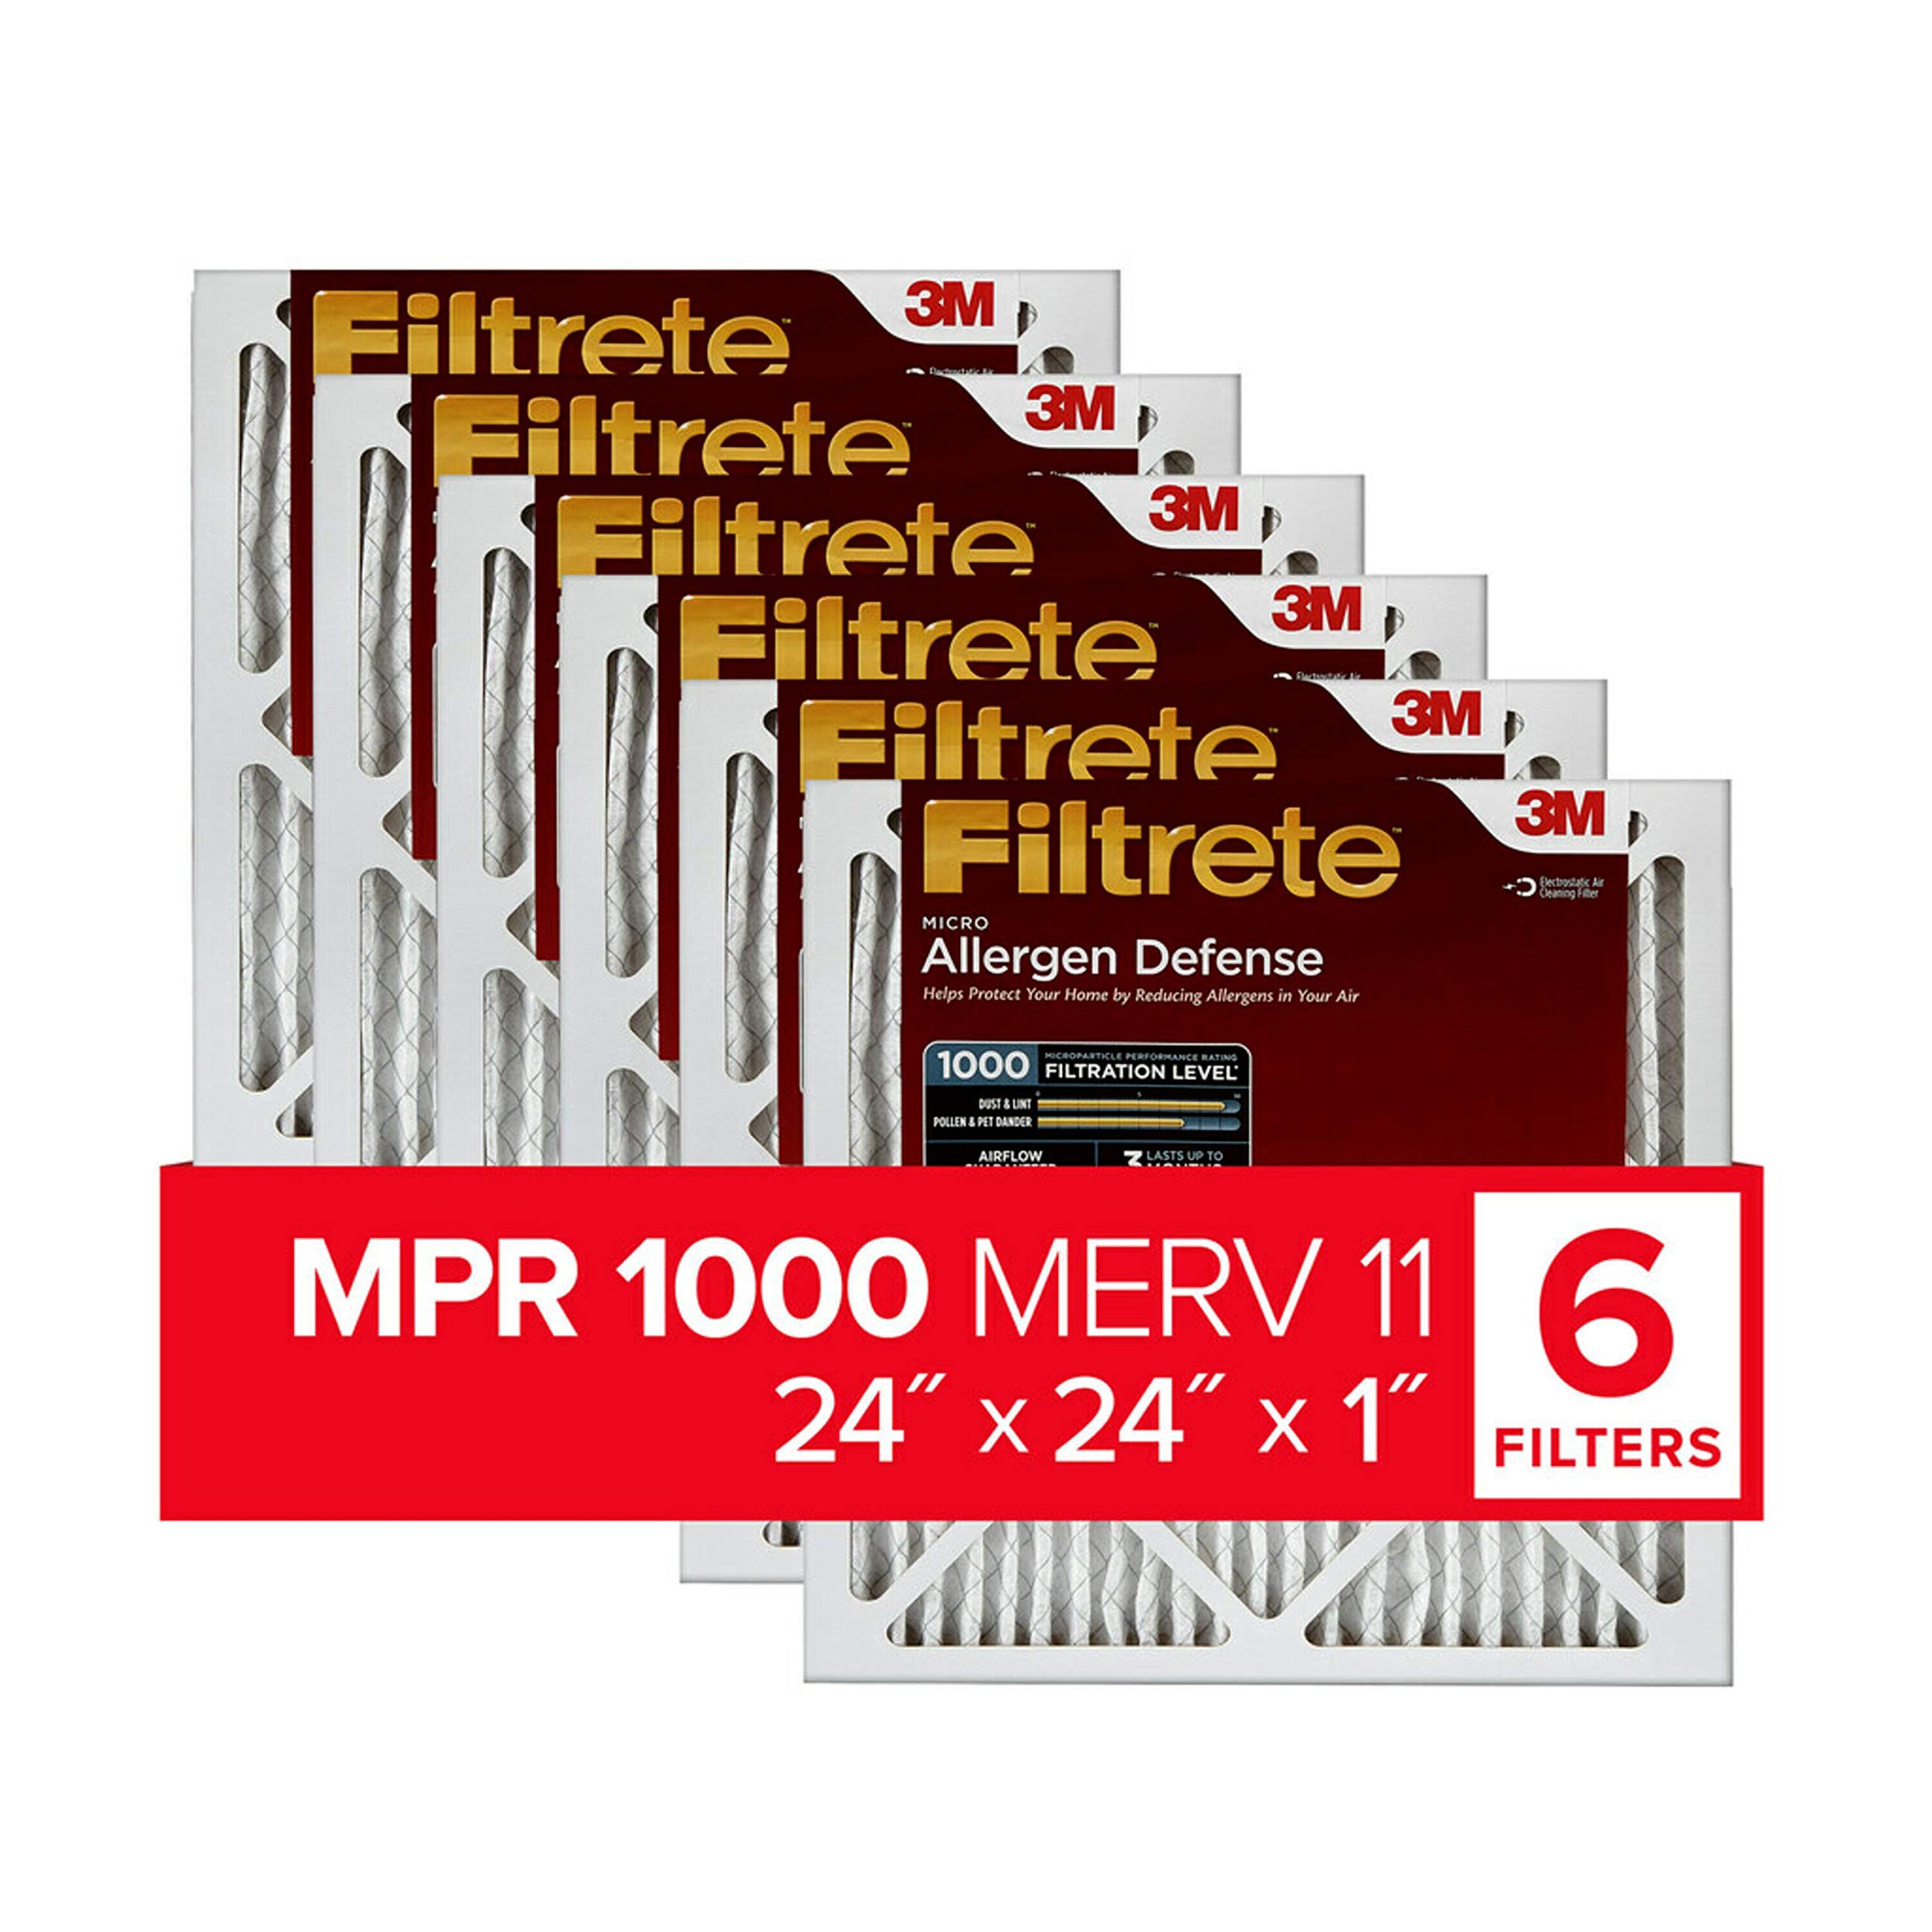 Filtrete 24x24x1 エアフィルター MPR 1000 MERV 11、アレルゲン防御、6 個パック (正確な寸法 23.81x23.81x0.81)